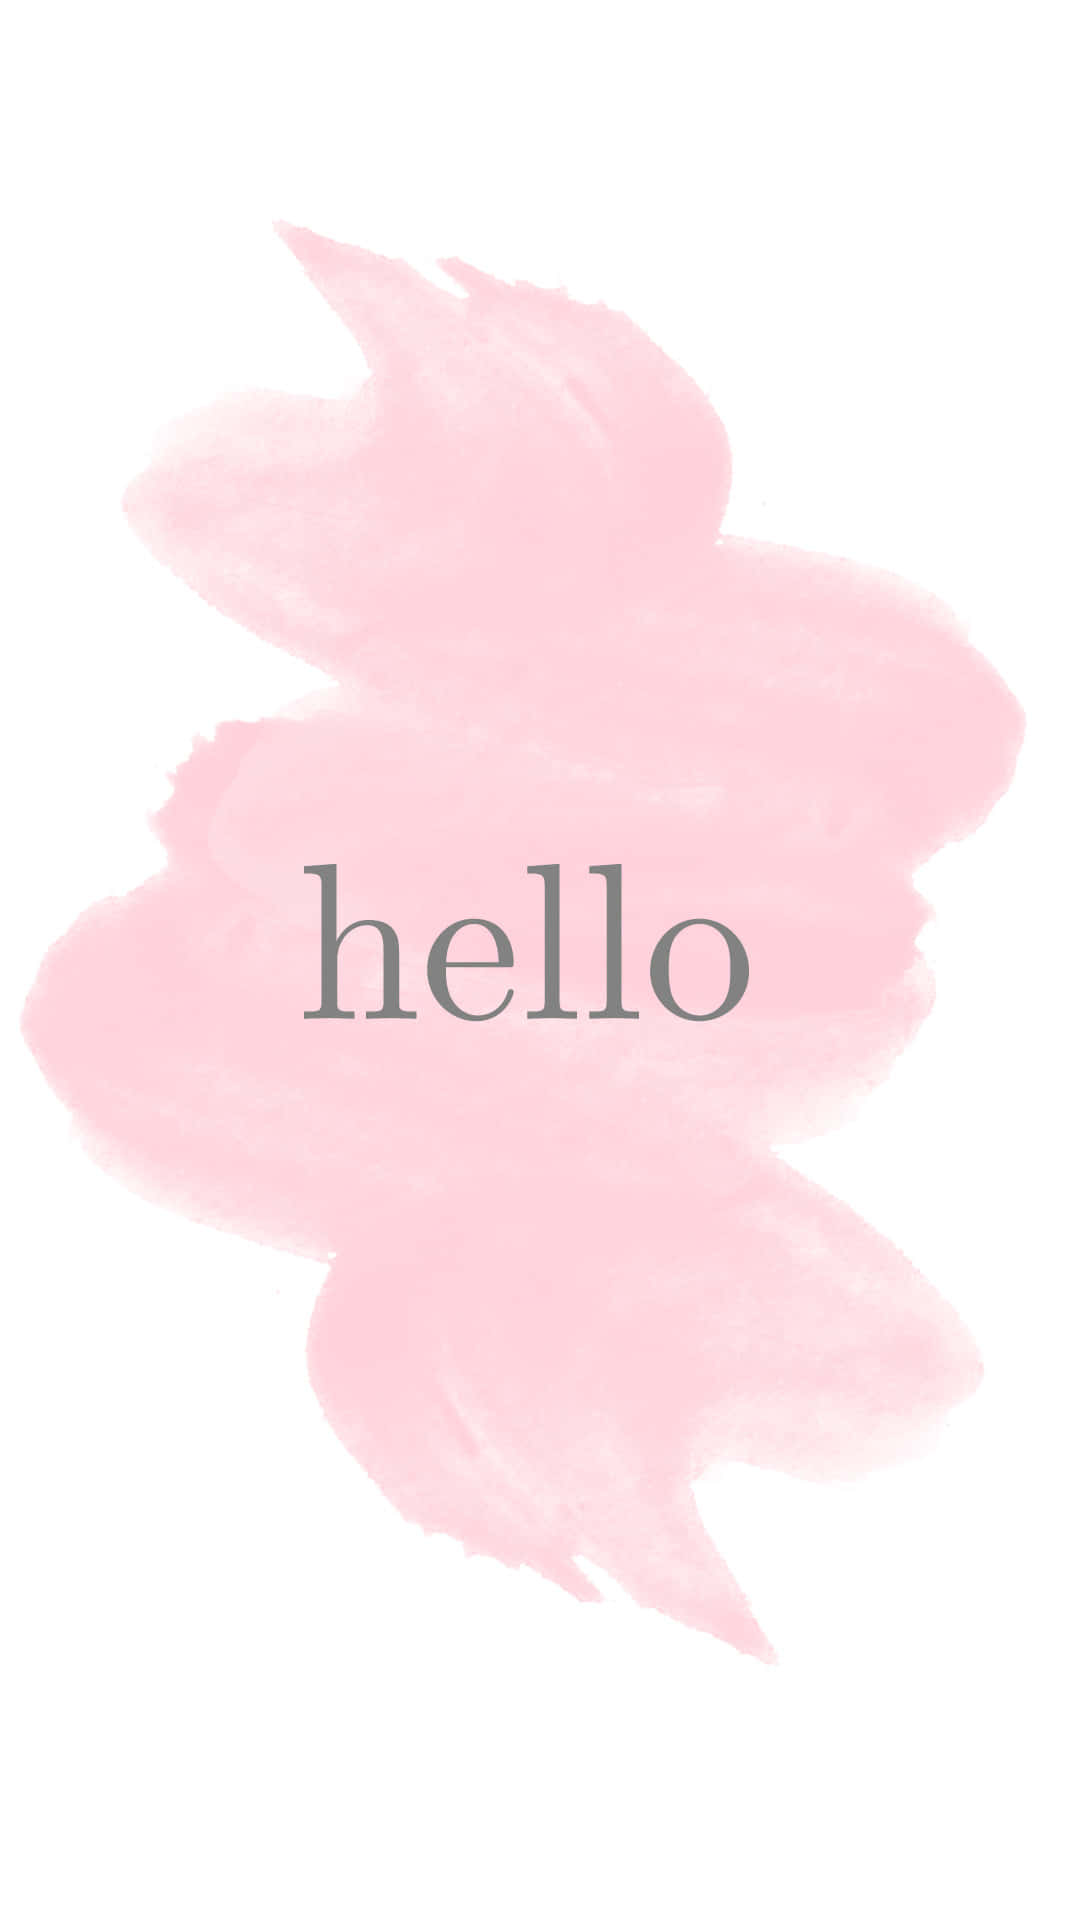 Hello - Pink Watercolor Brushstroke Wallpaper